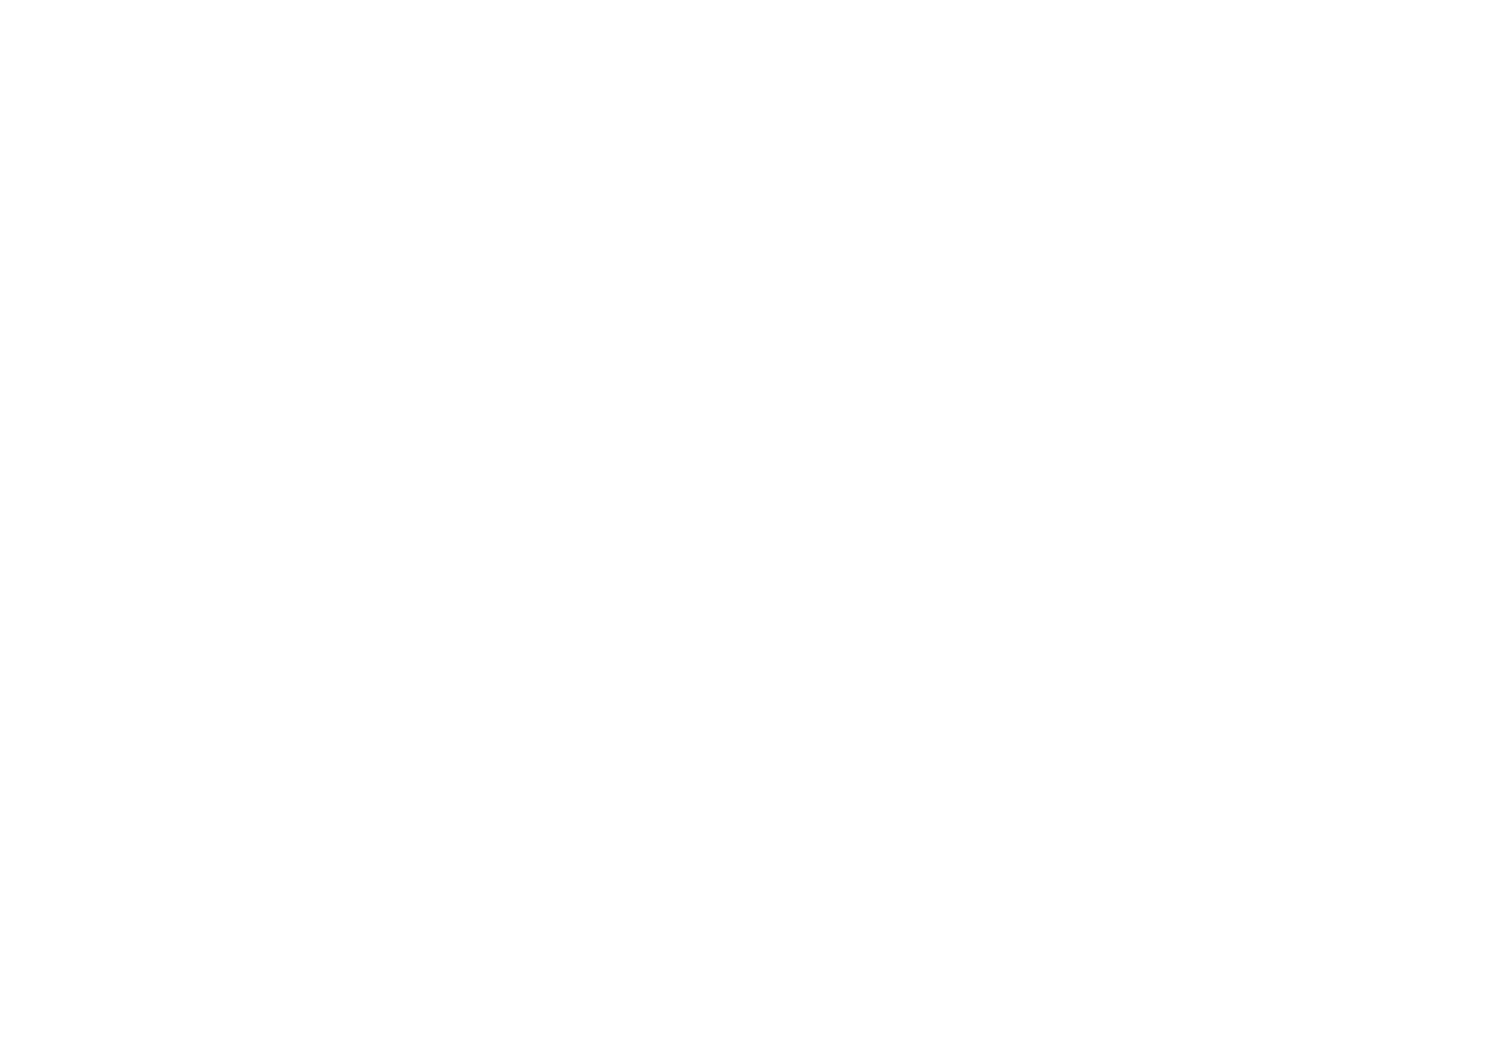 THE WINE CELLAR